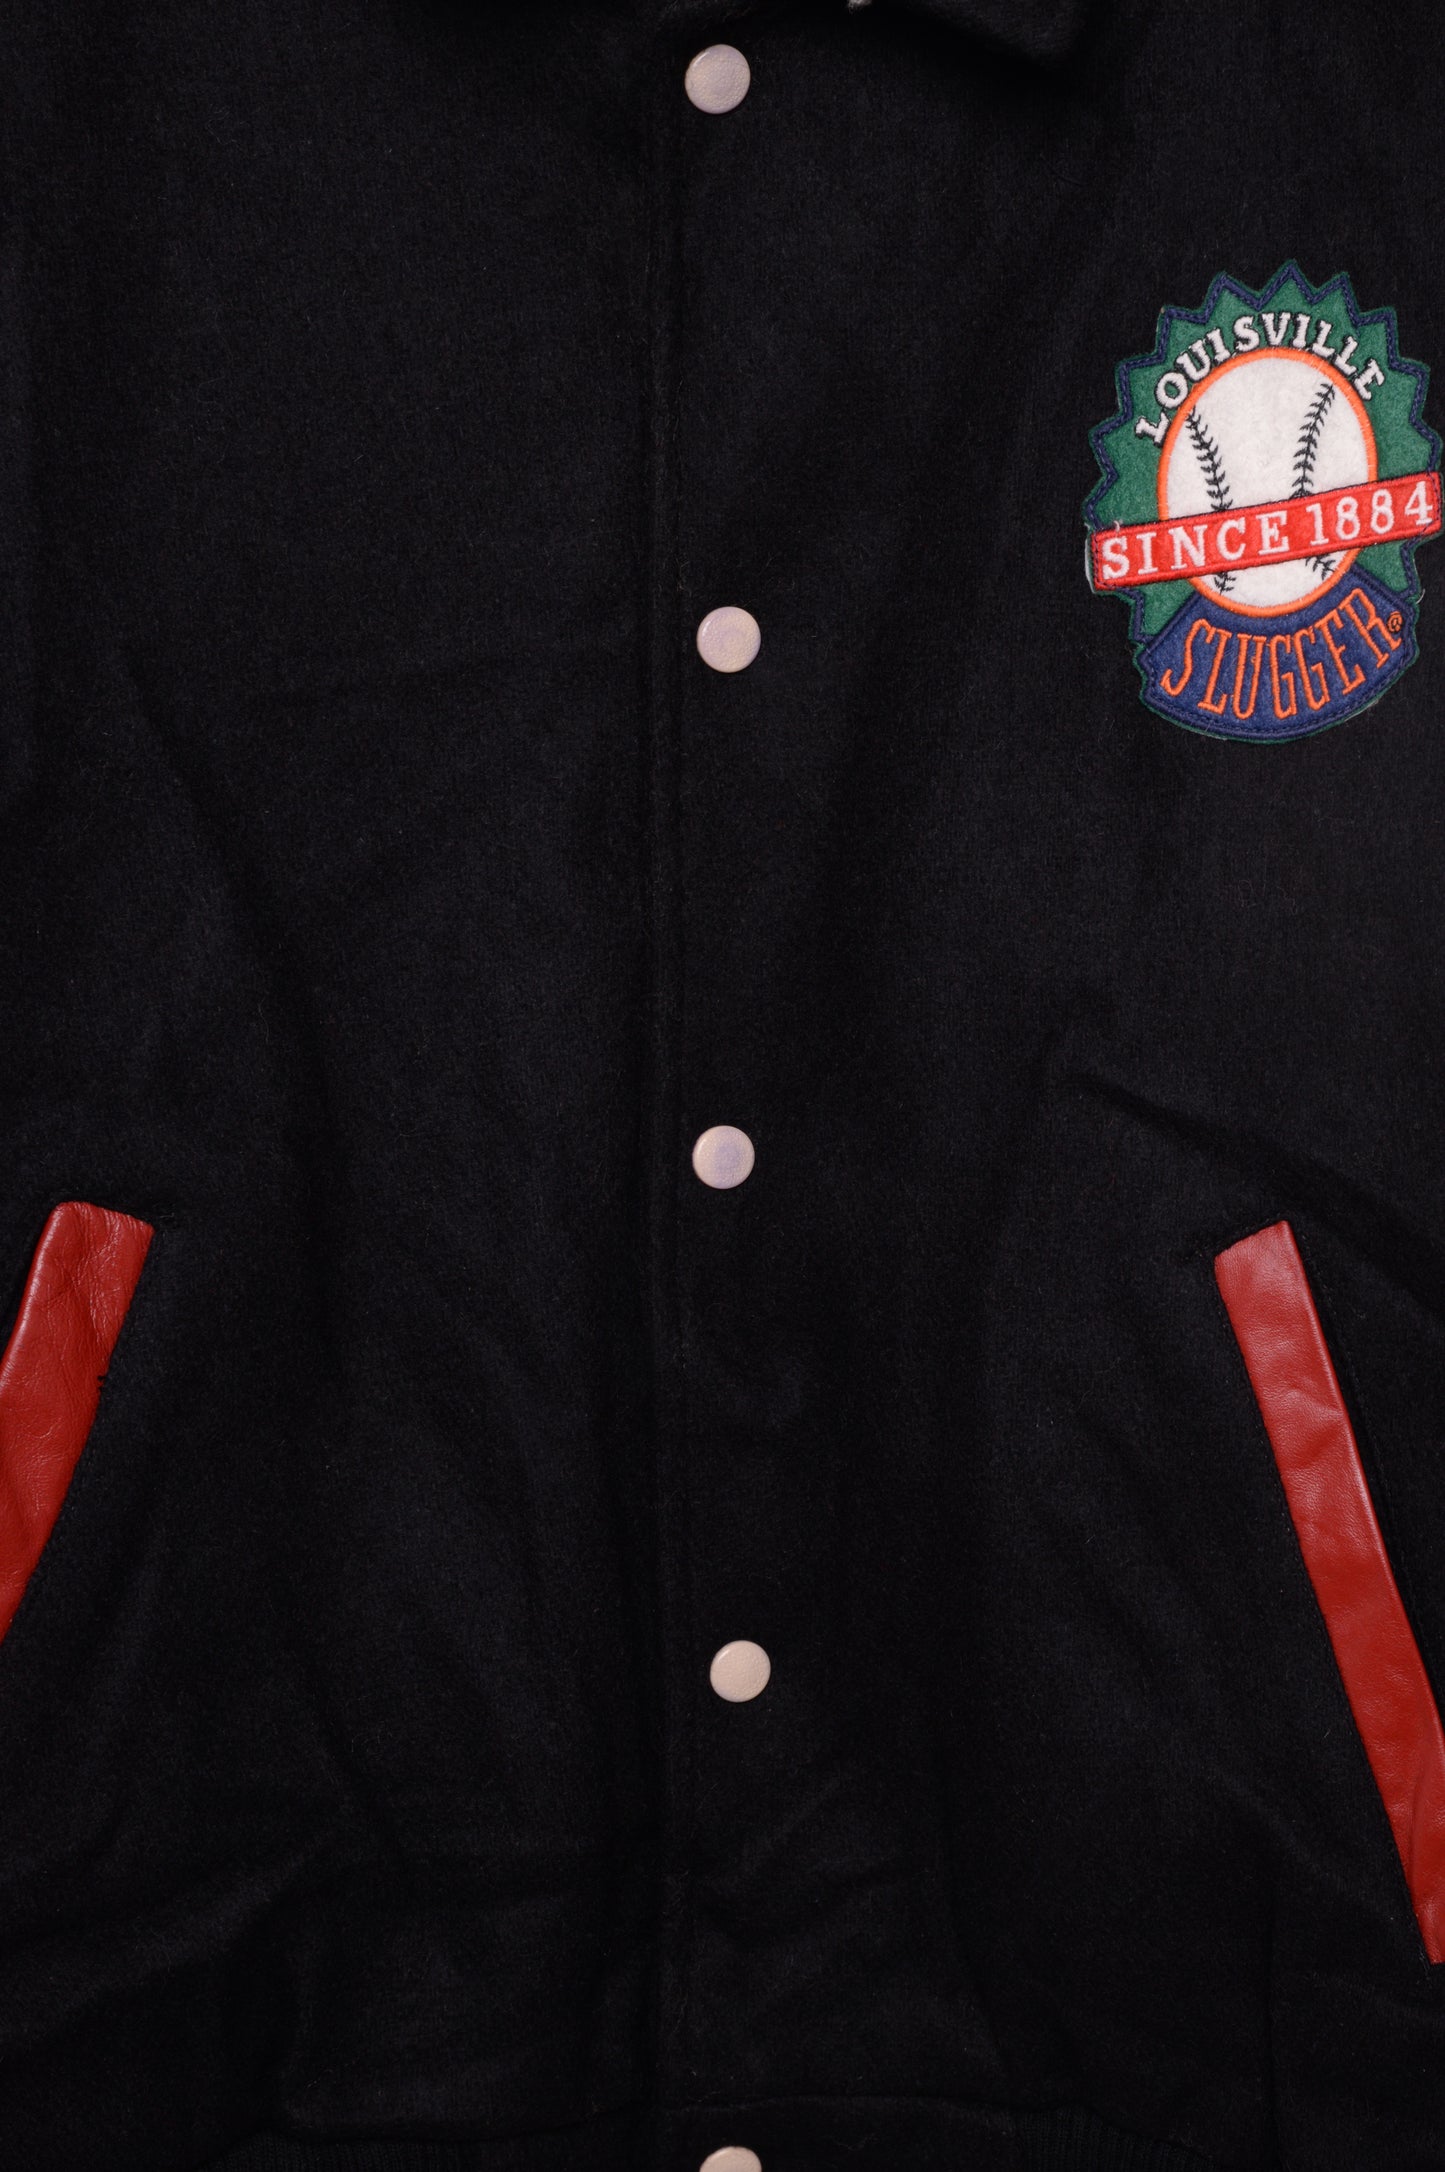 vintage louisville jacket